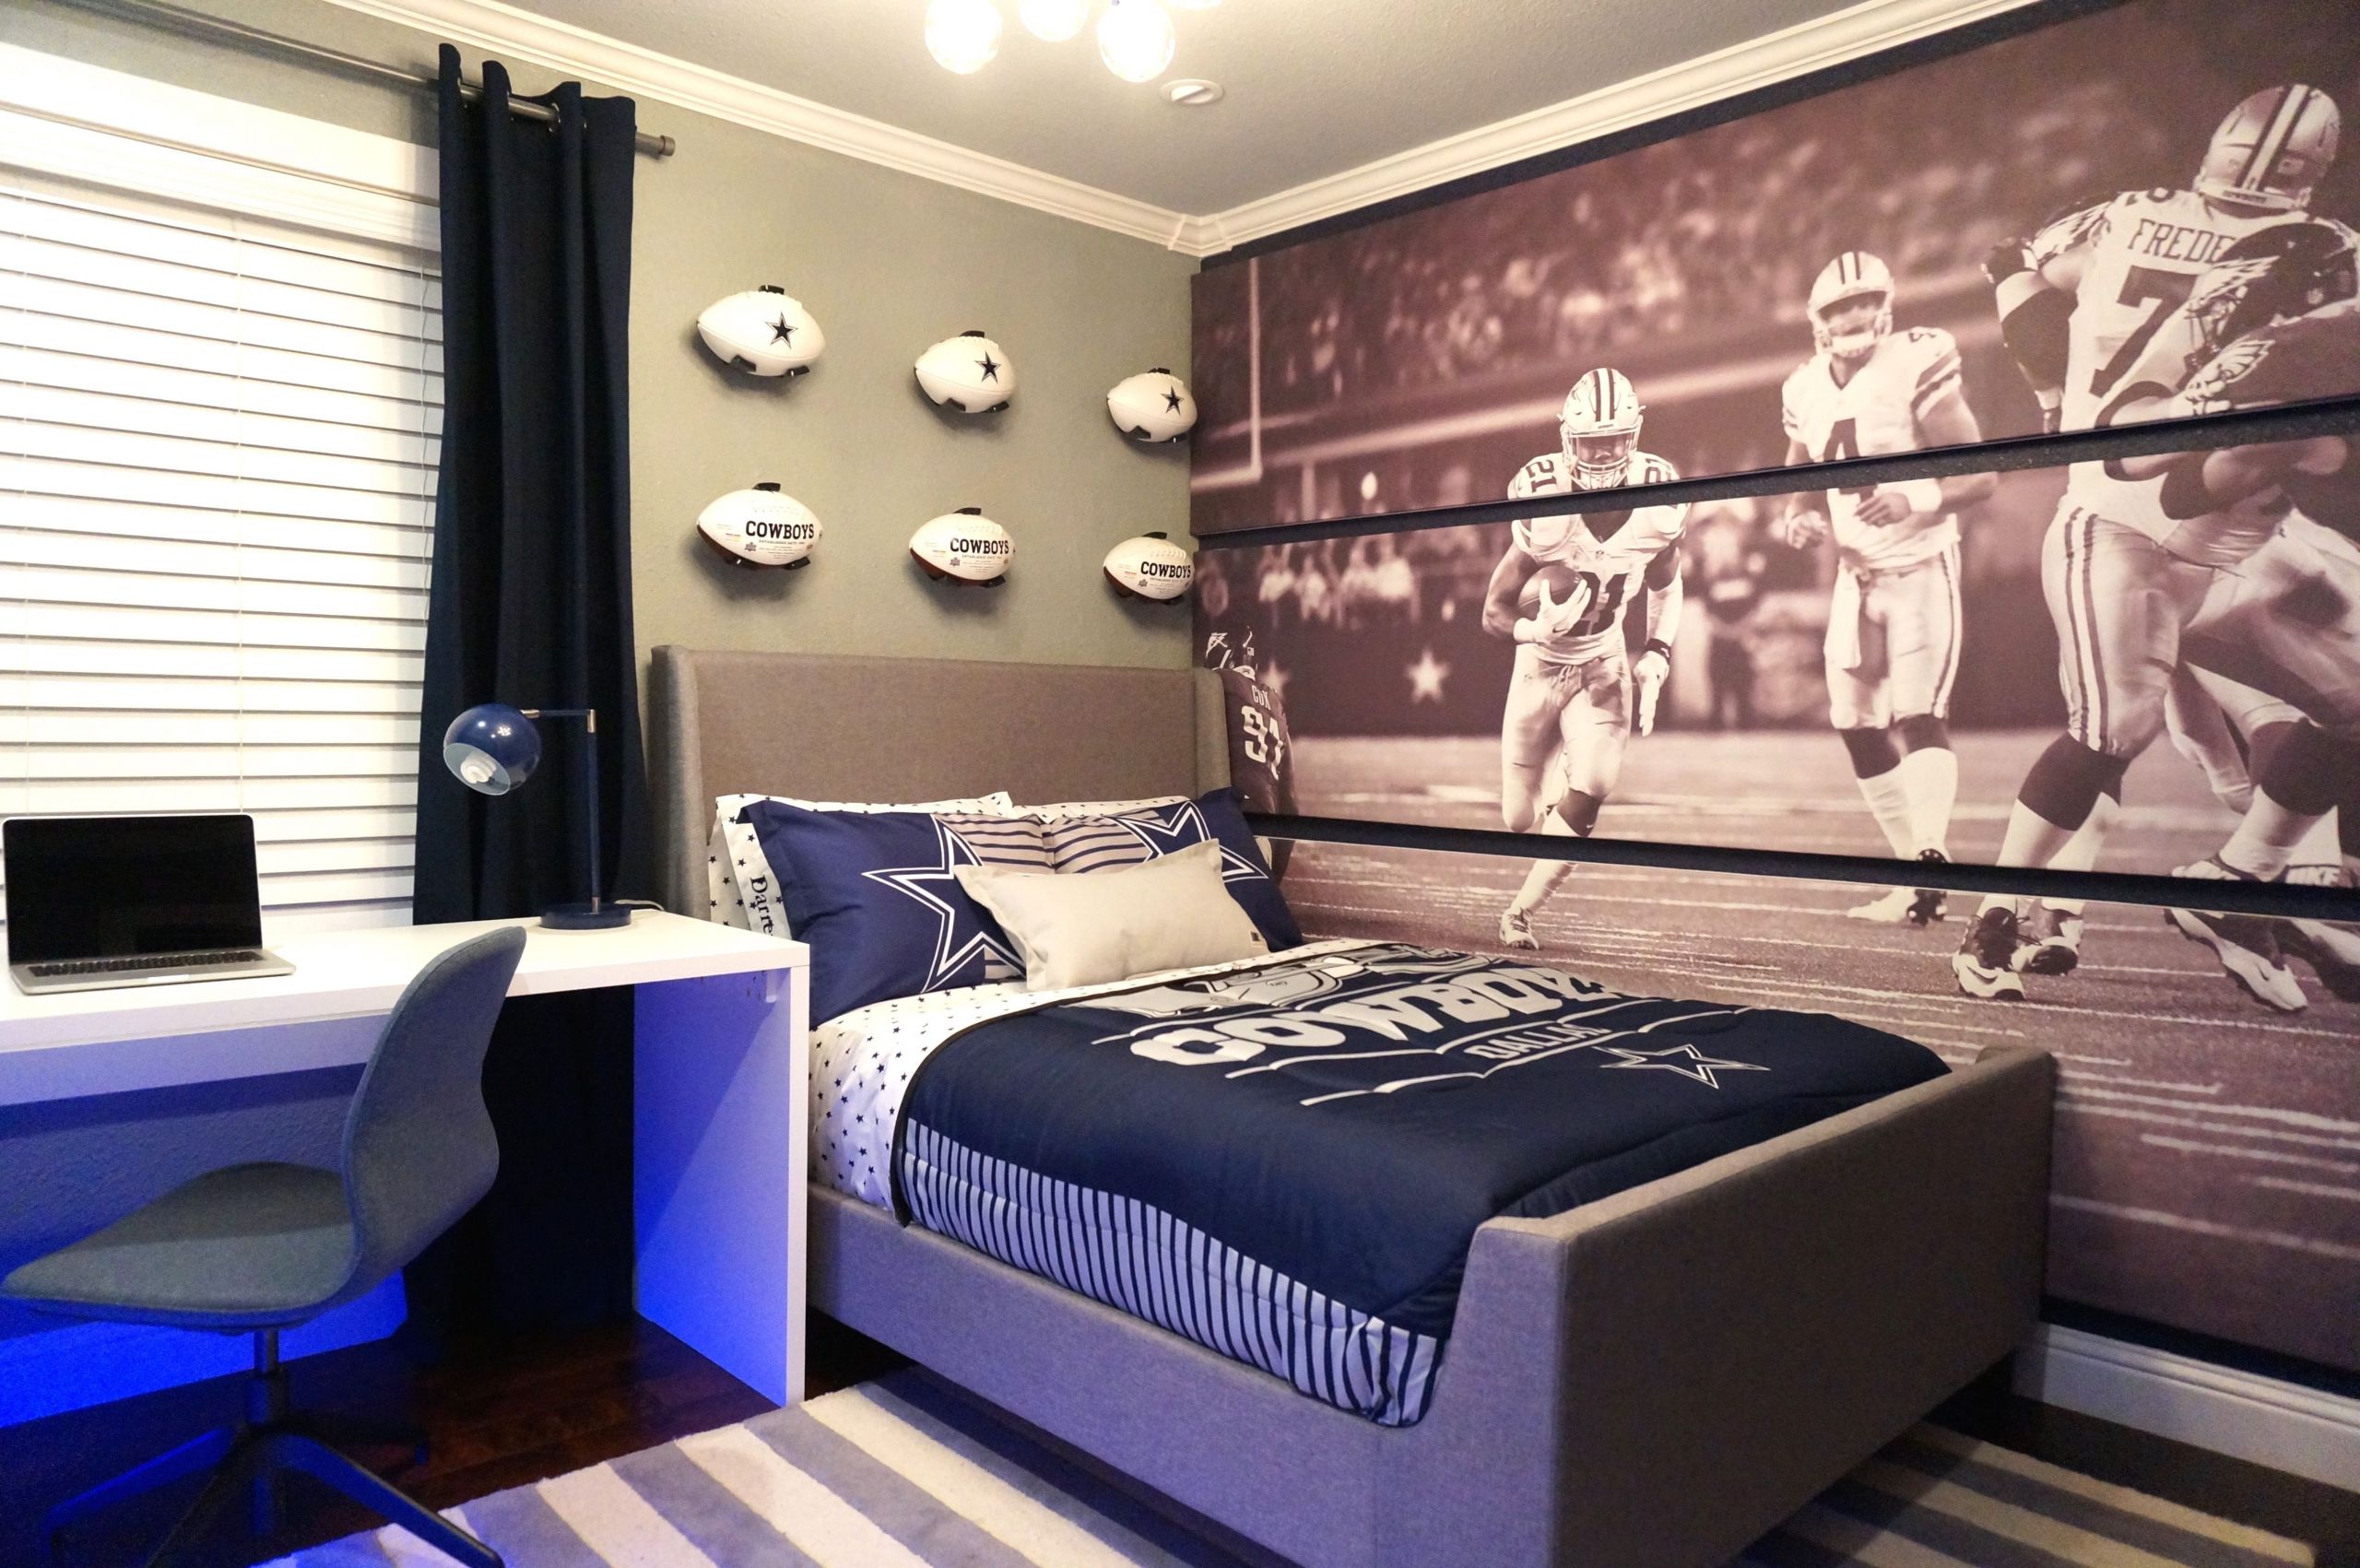 Dallas Cowboys Kids Room
 Pin by Alina Druga Interiors on Dallas cowboys bedroom